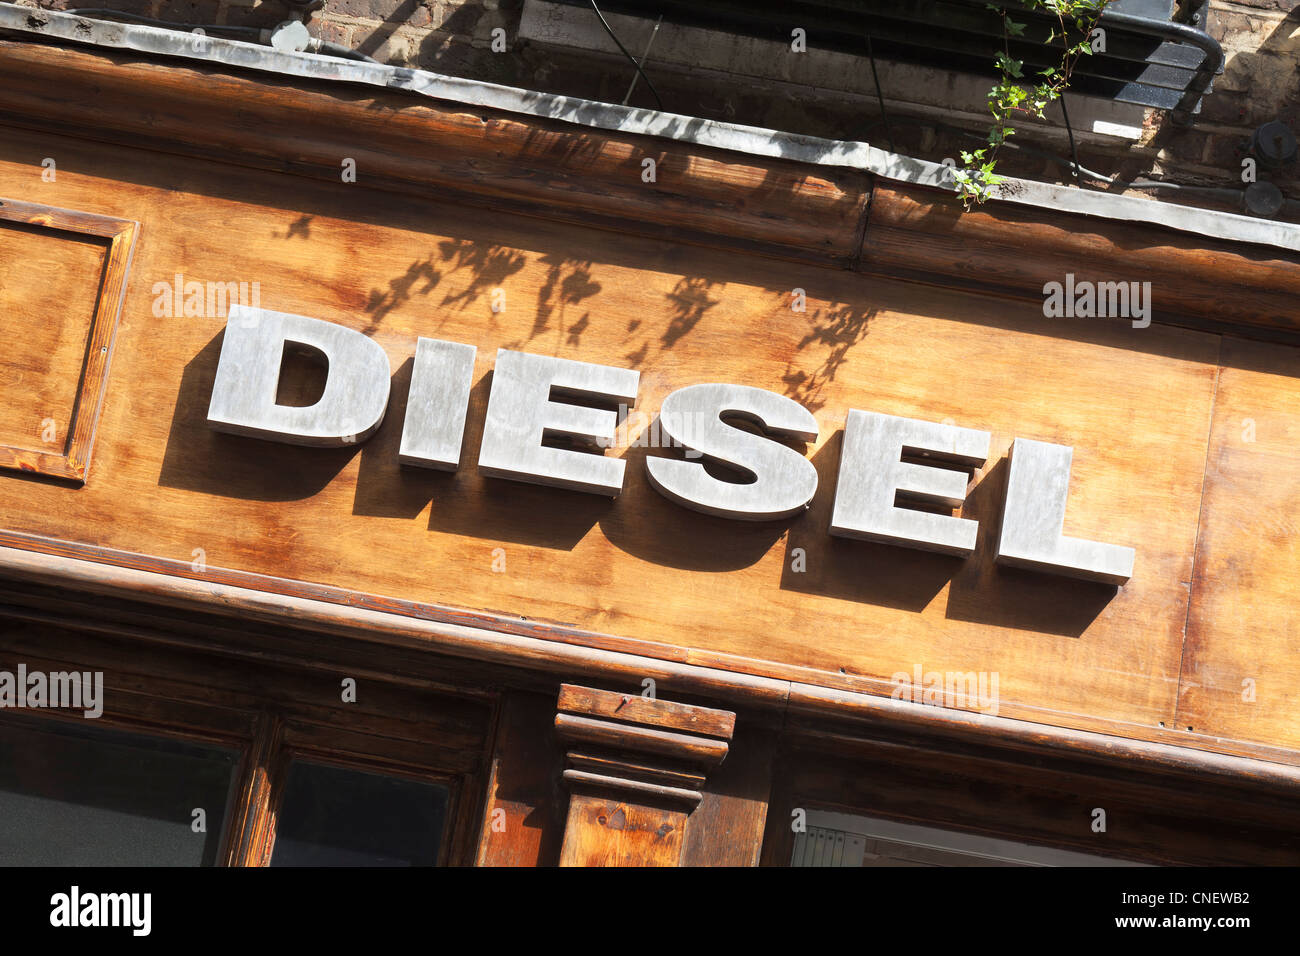 Boutique Diesel signe, Londres, Angleterre Banque D'Images